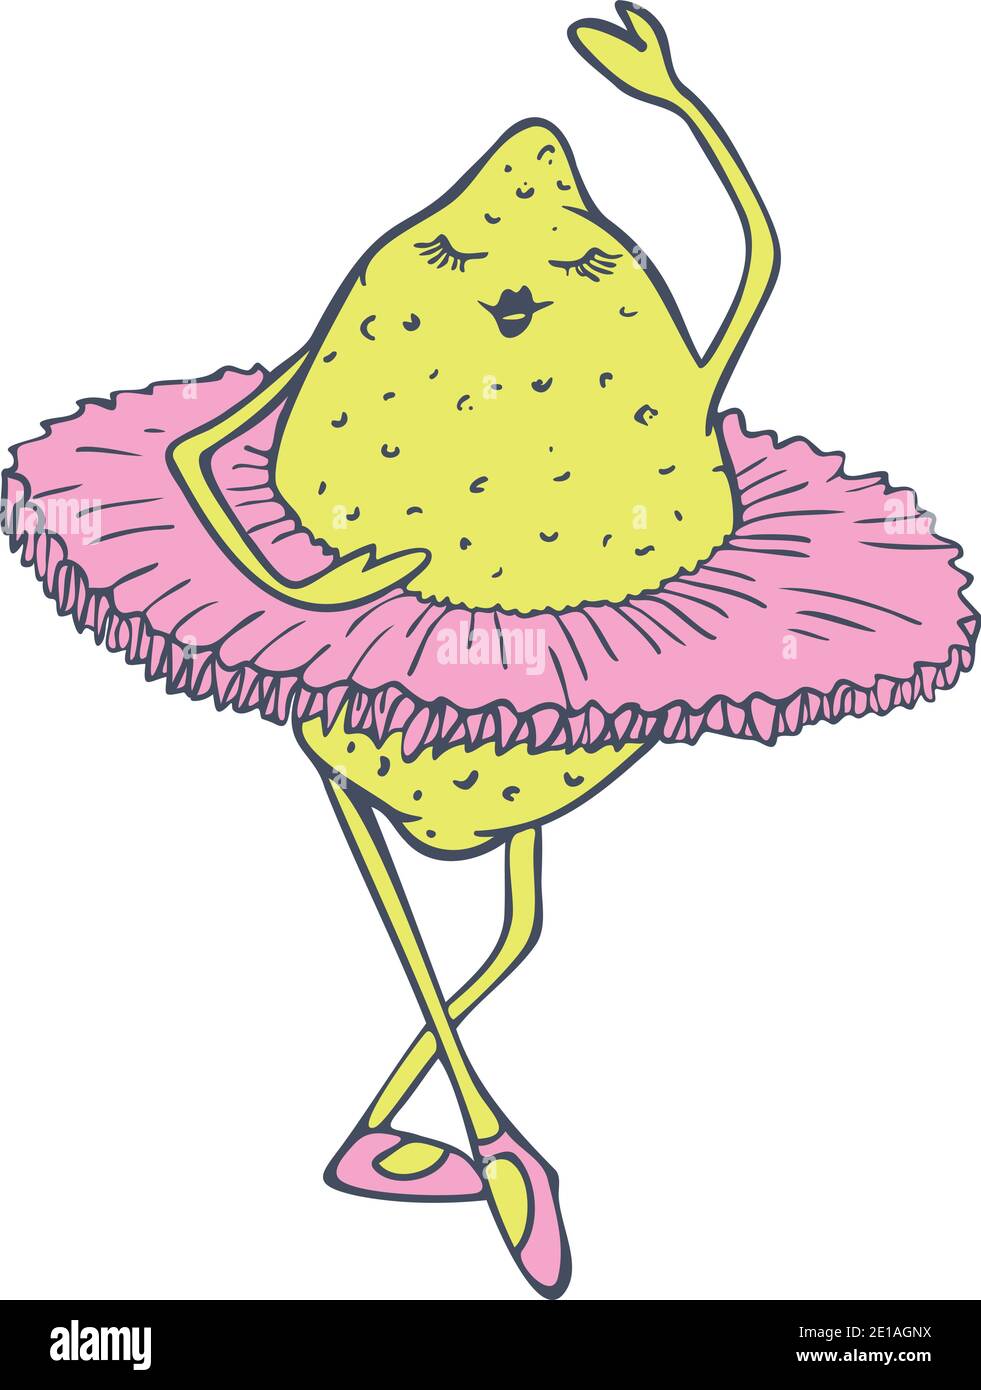 Vector illustration with lemon dancing in ballet tutu. Dancing fruit design. Stock Vector